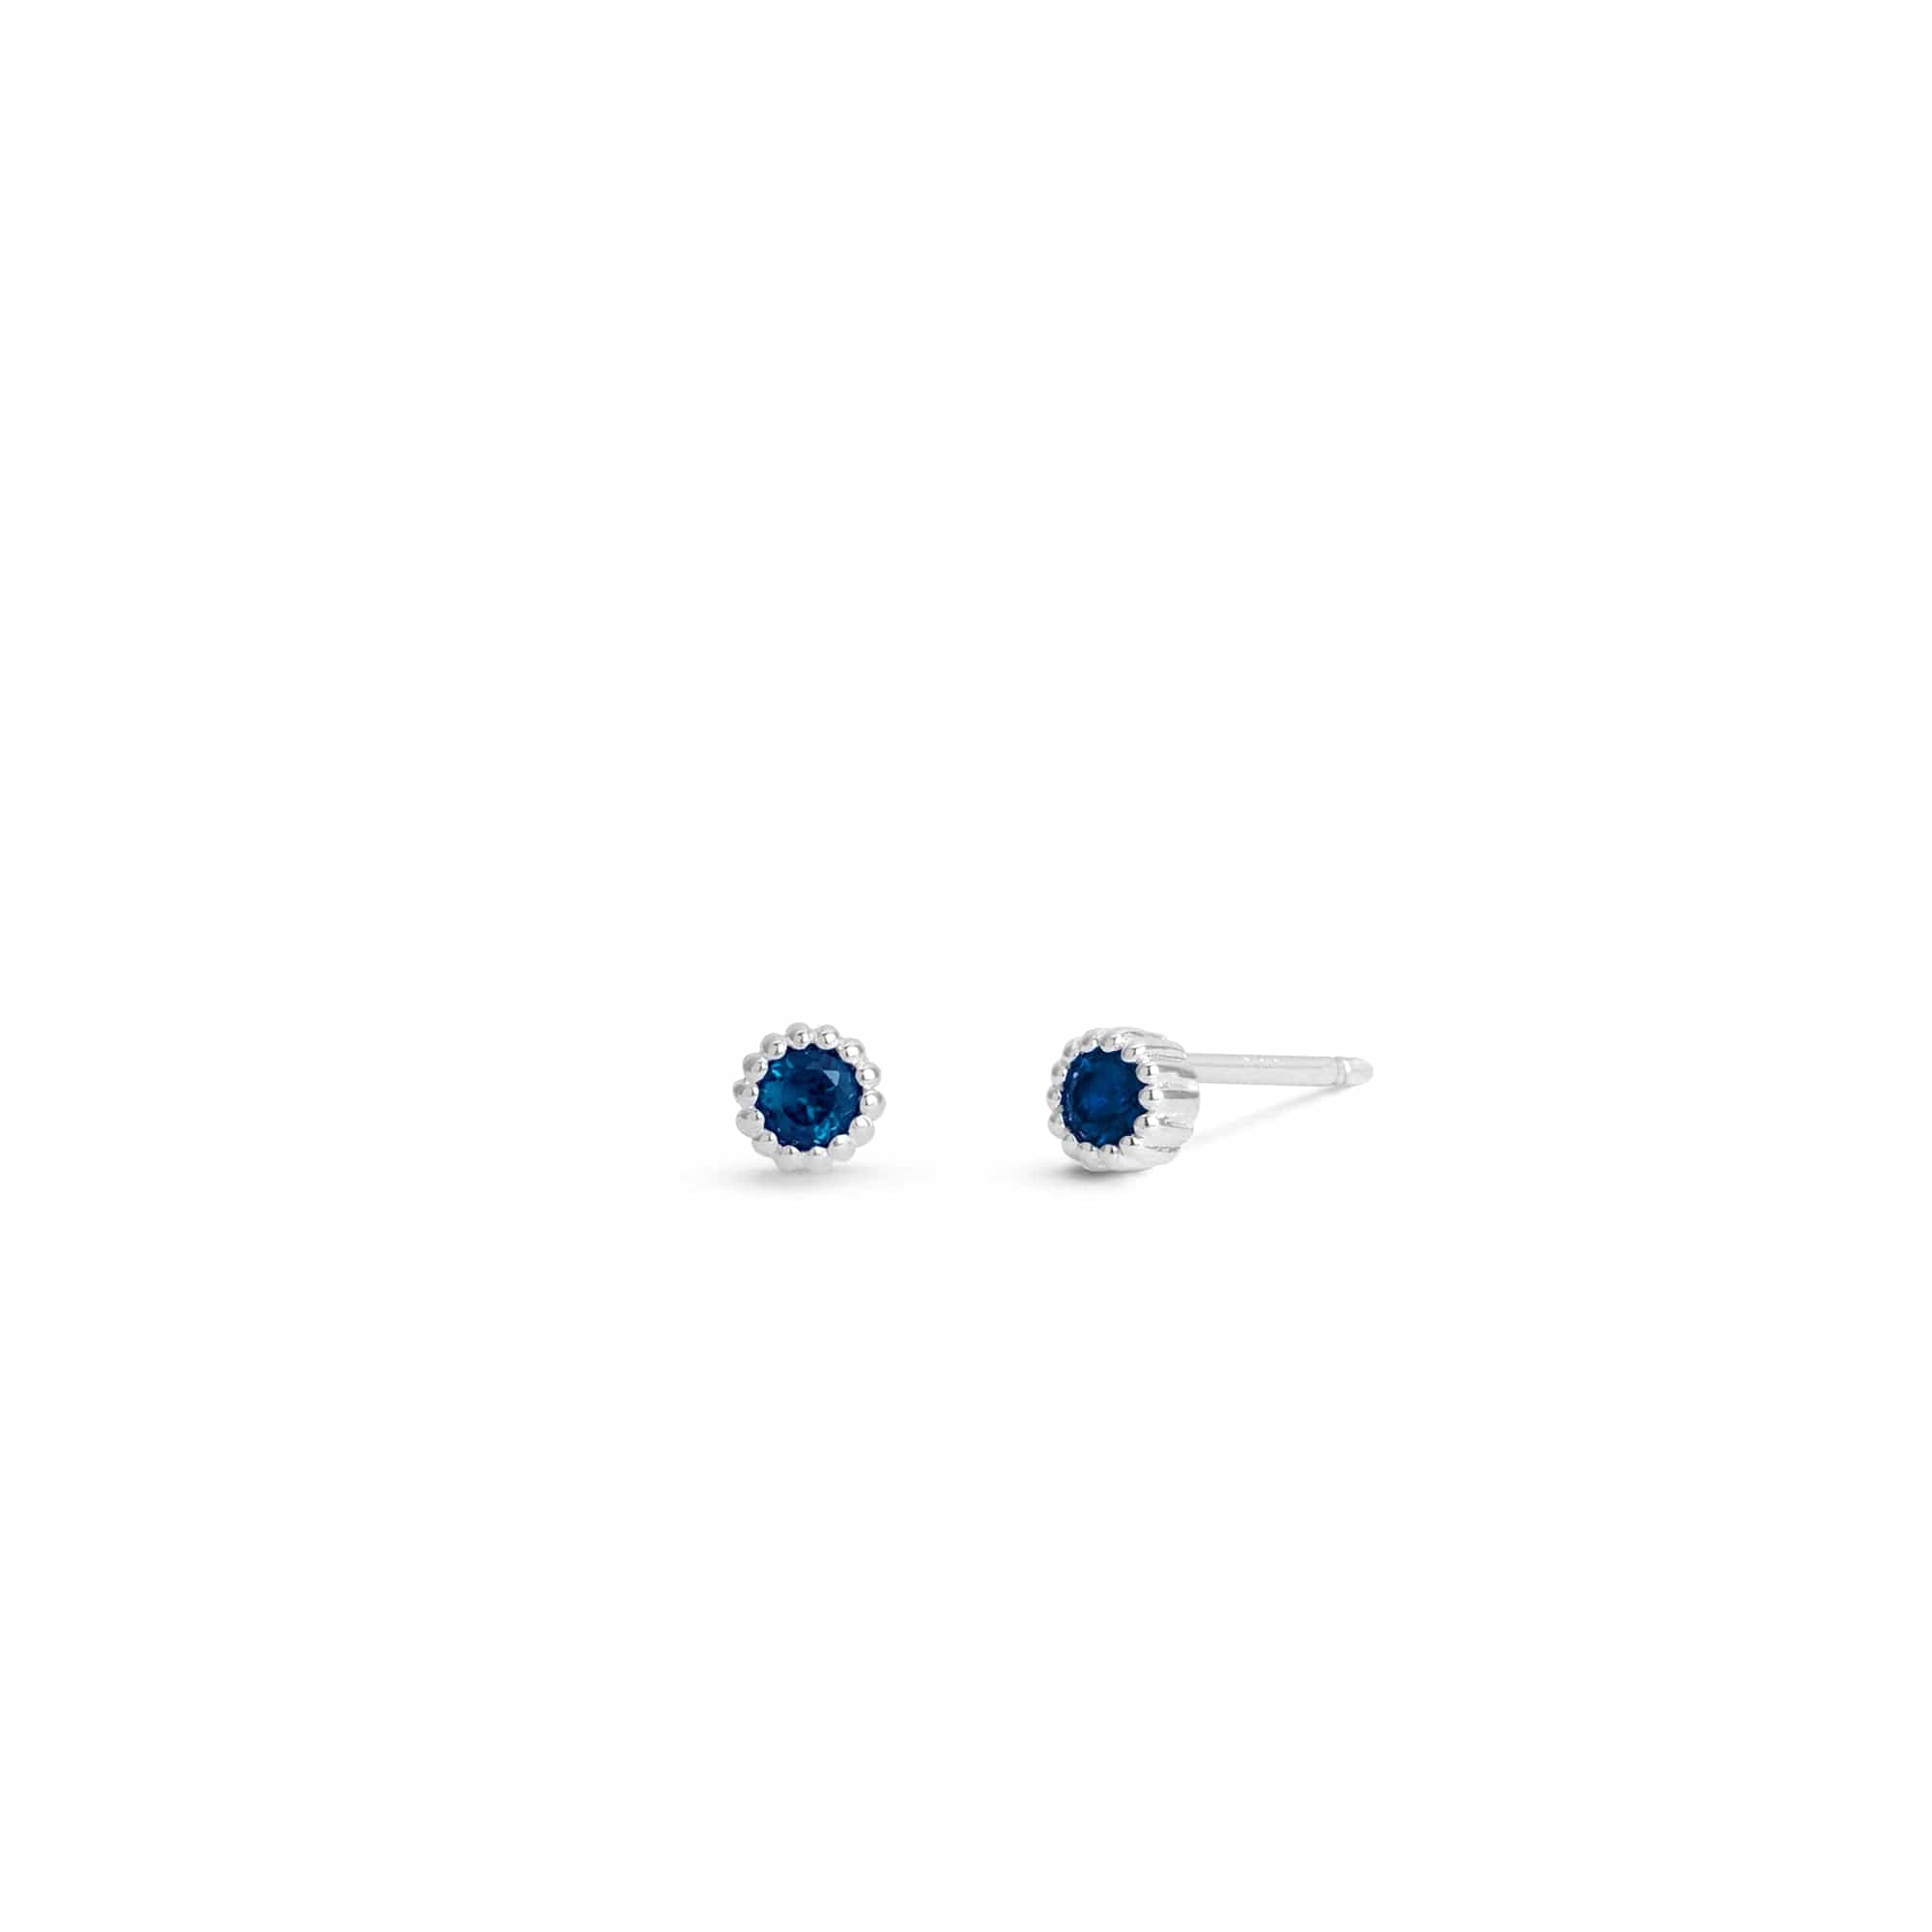 Boma Jewelry Earrings London Blue Topaz Mini Colored Gemstone Studs